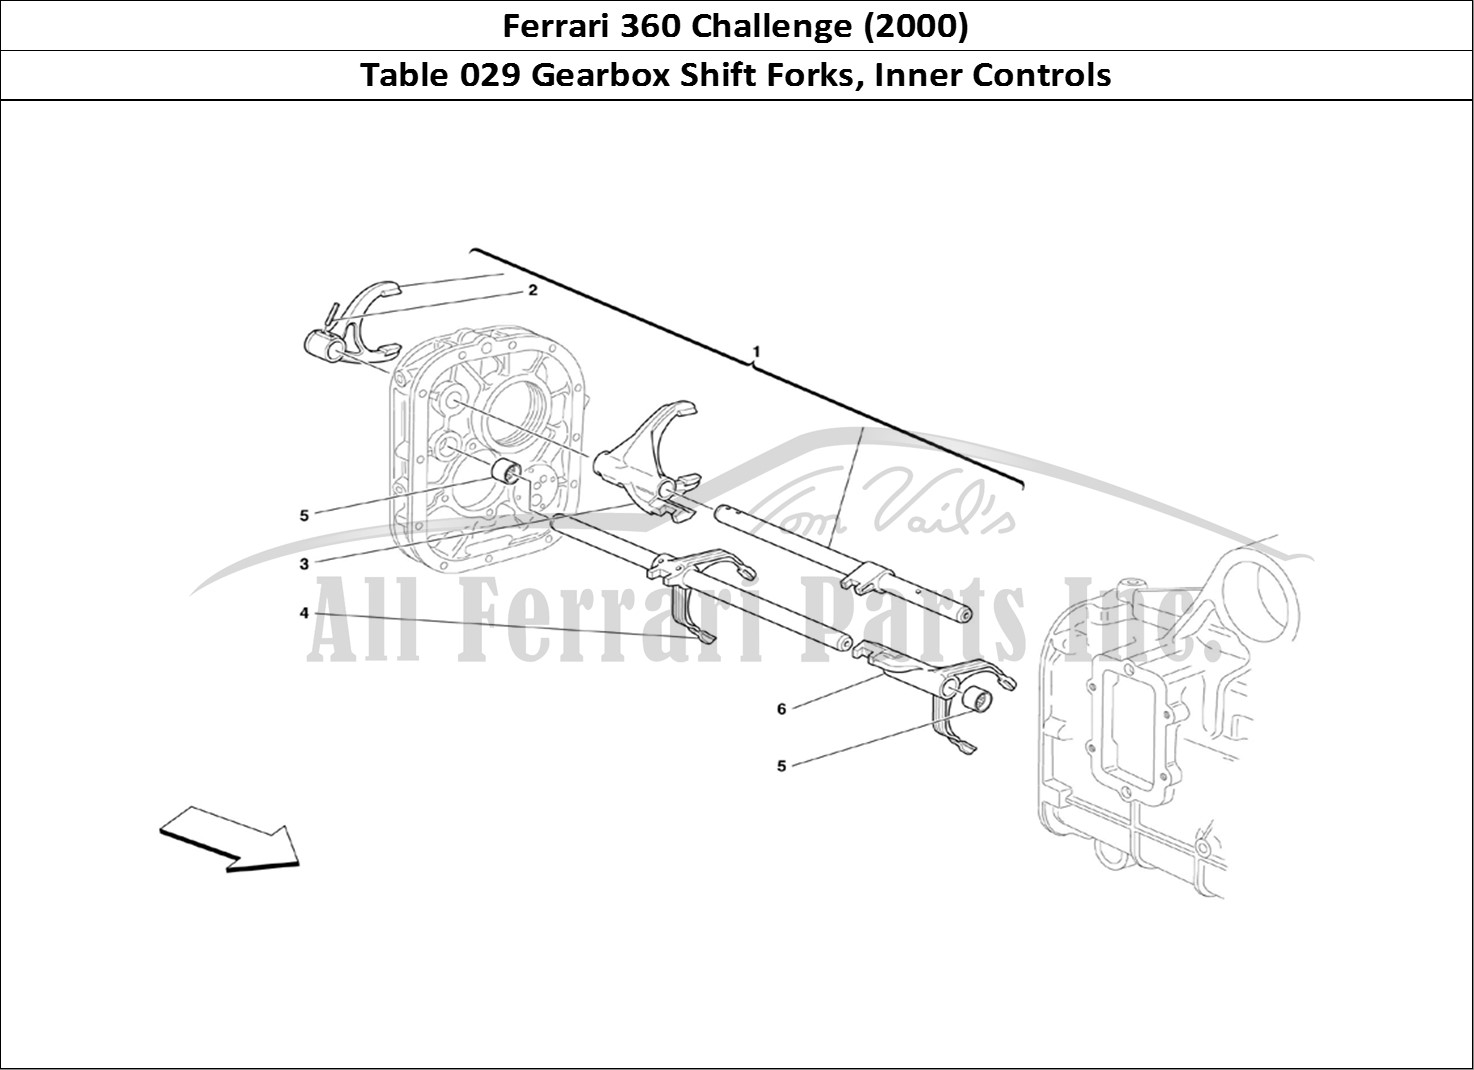 Ferrari Parts Ferrari 360 Challenge (2000) Page 029 Inside Gearbox Controls